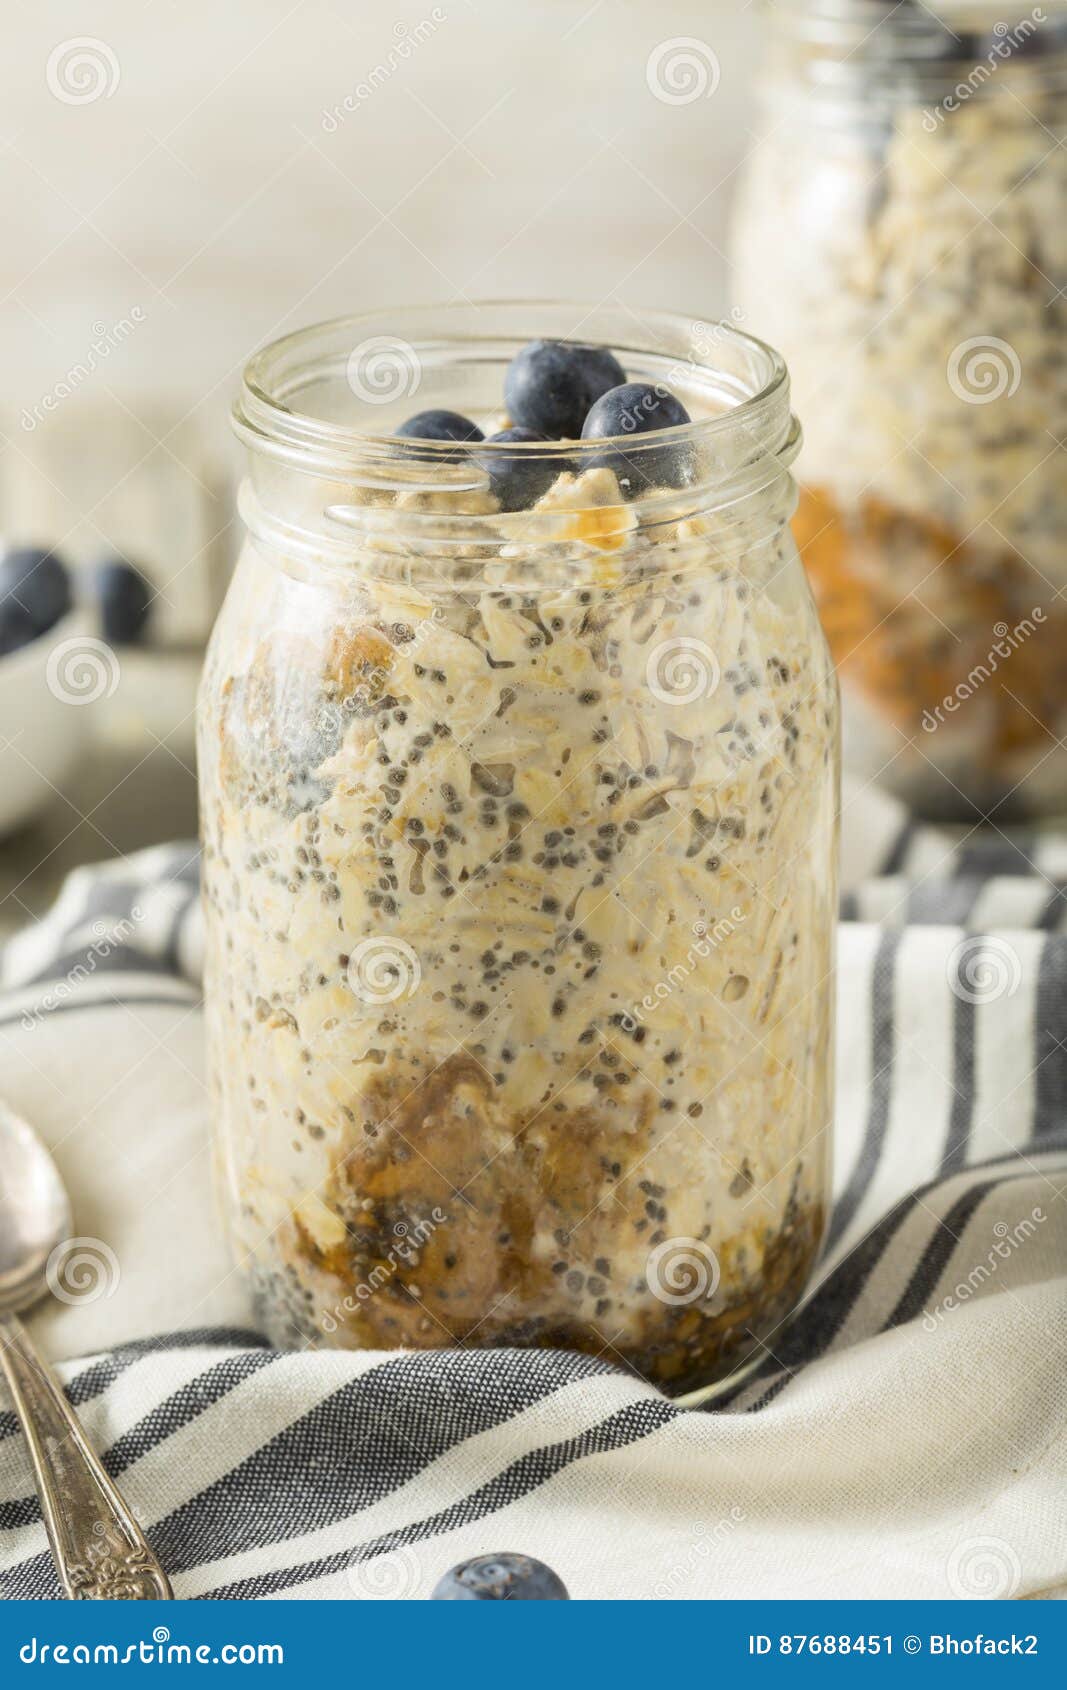 healthy homemade overnight oats oatmeal